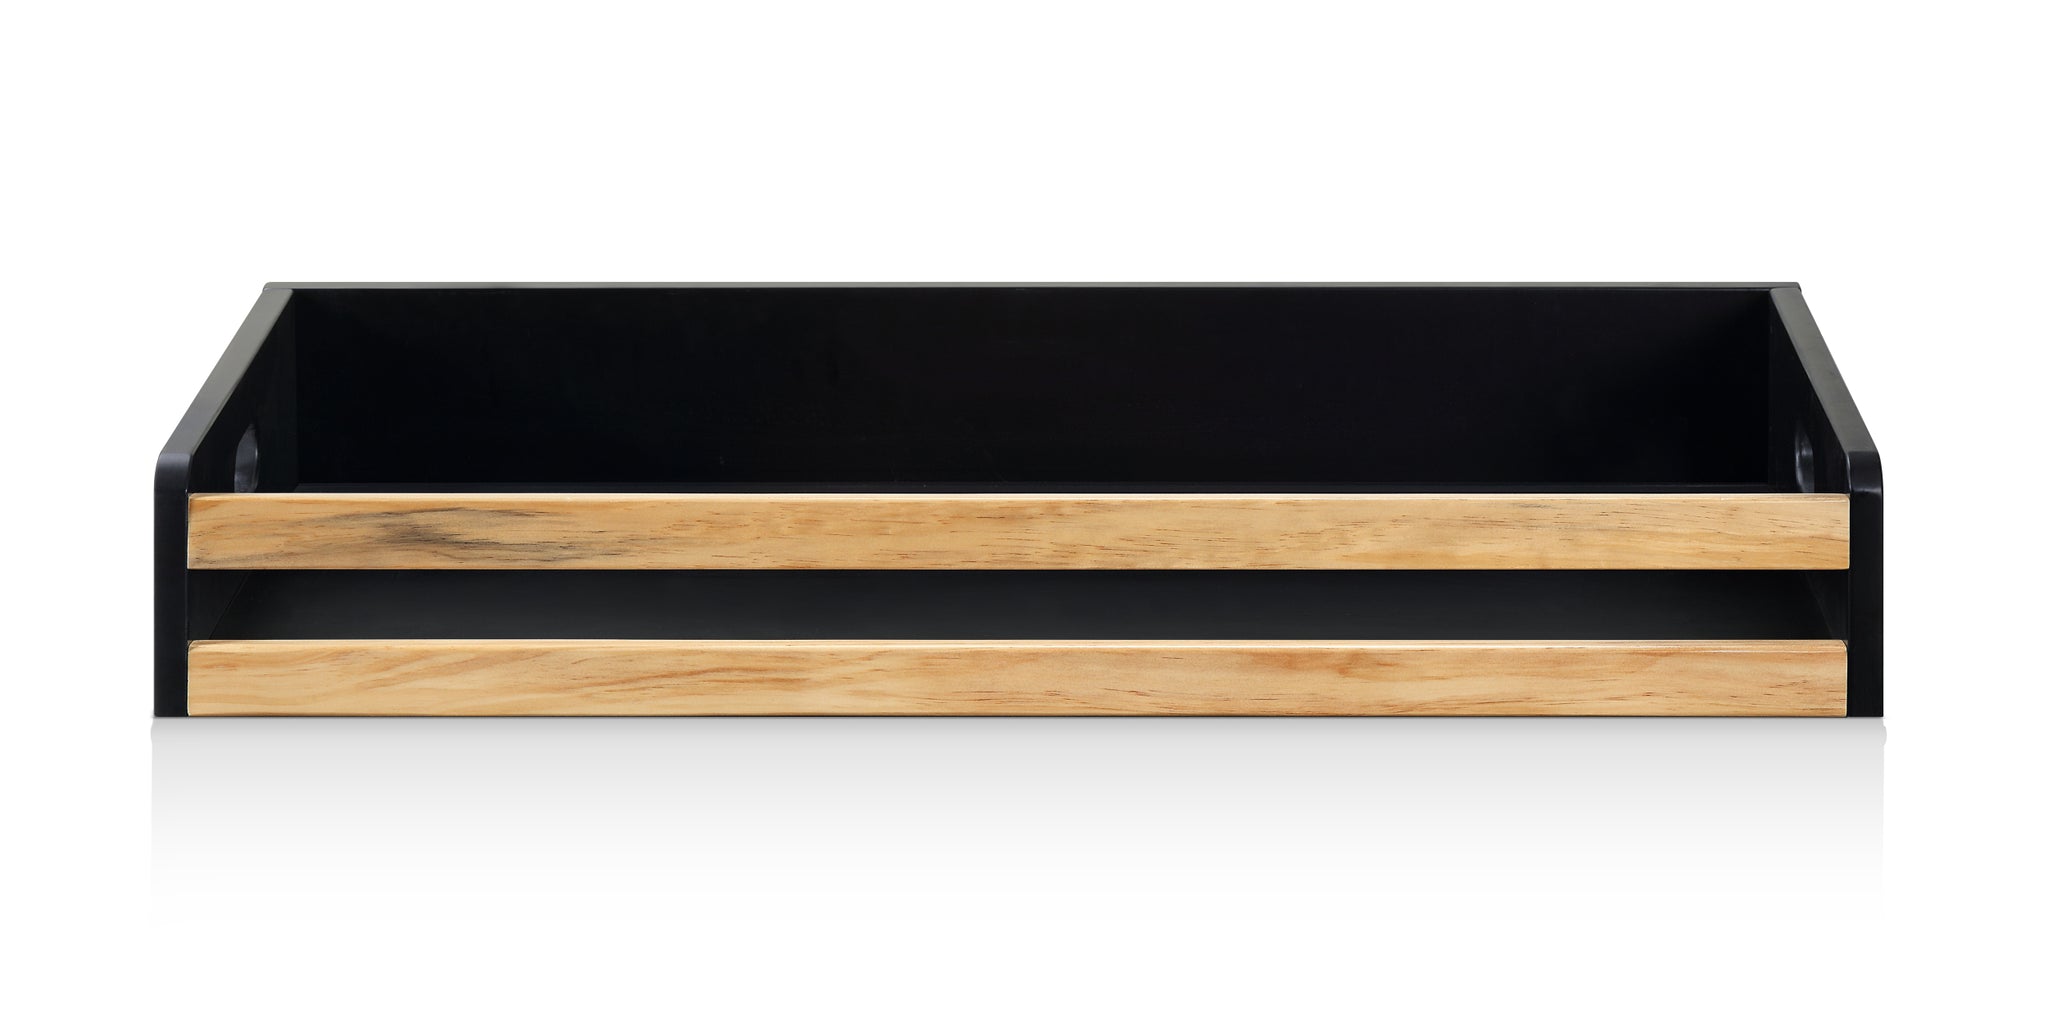 Livia Multi Purpose Changing Table Black Natural black-solid wood